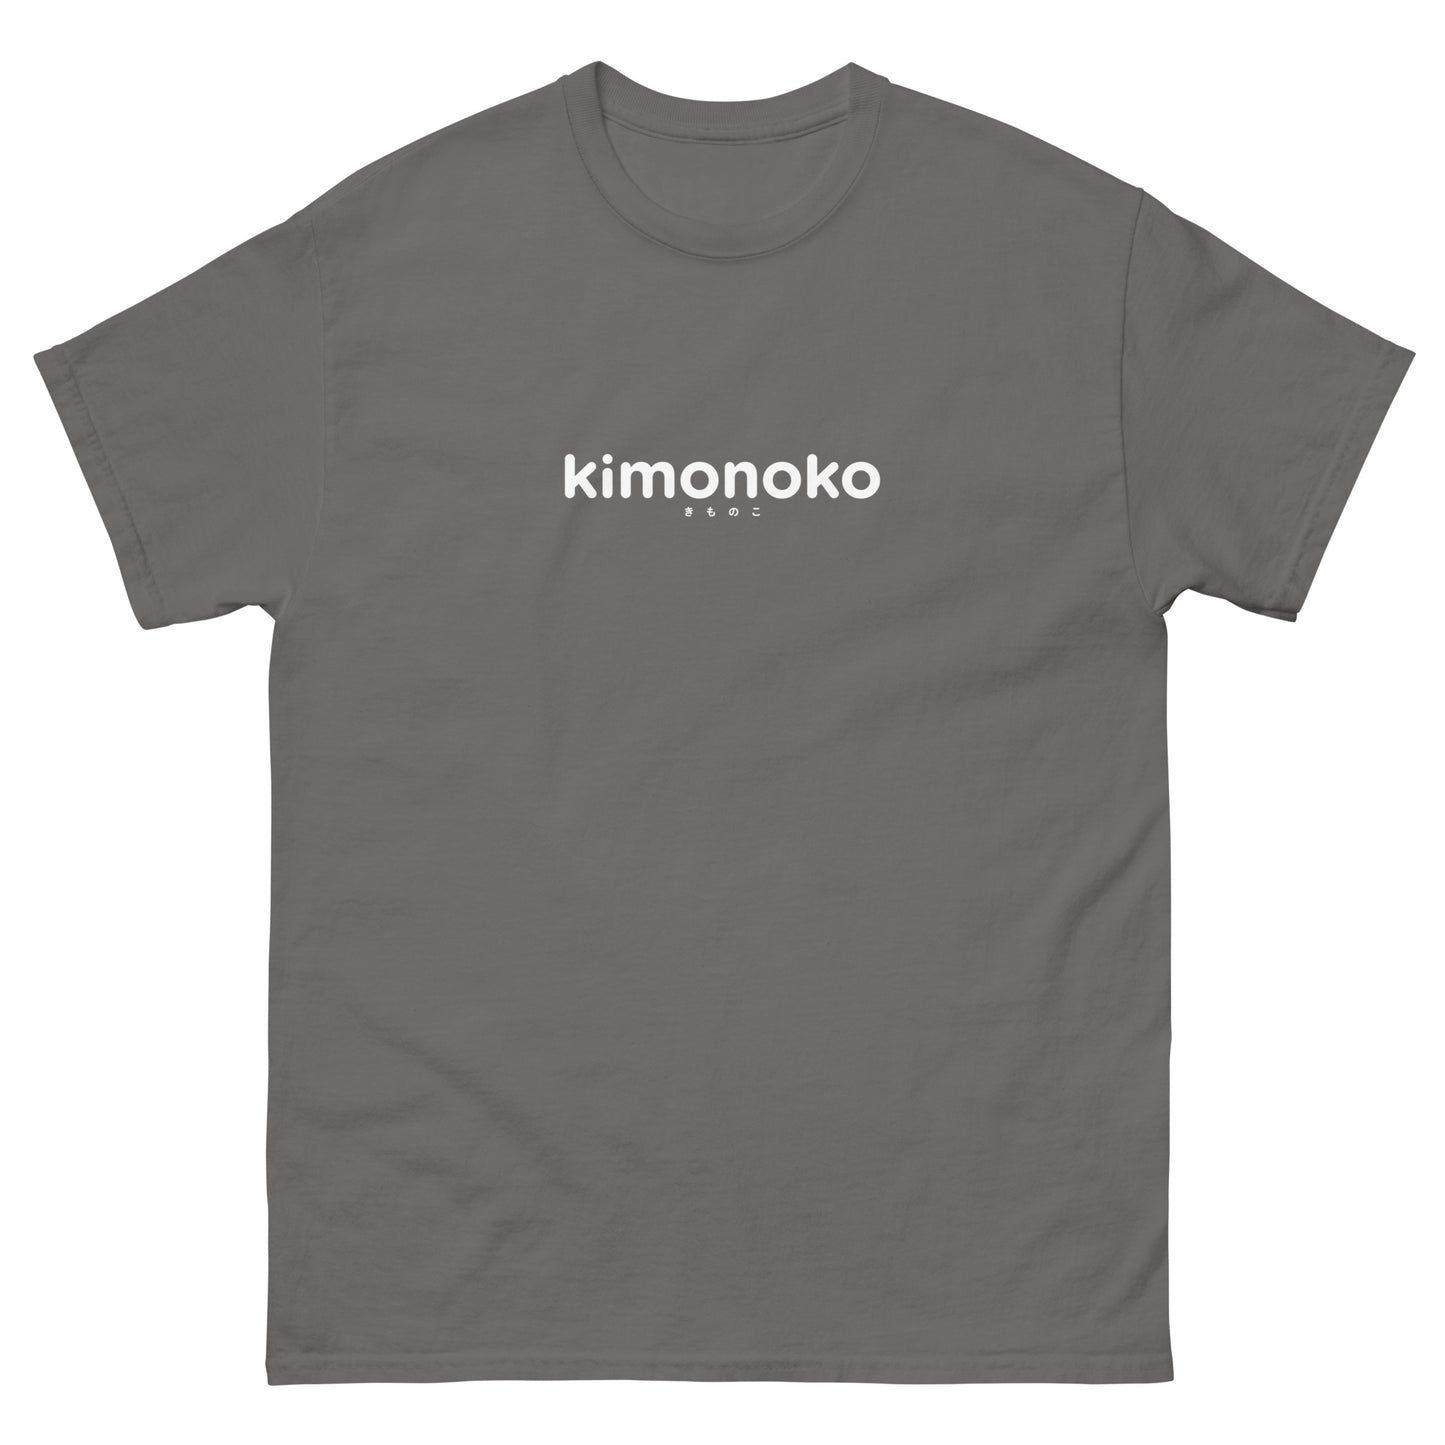 T-shirt for kimonoko